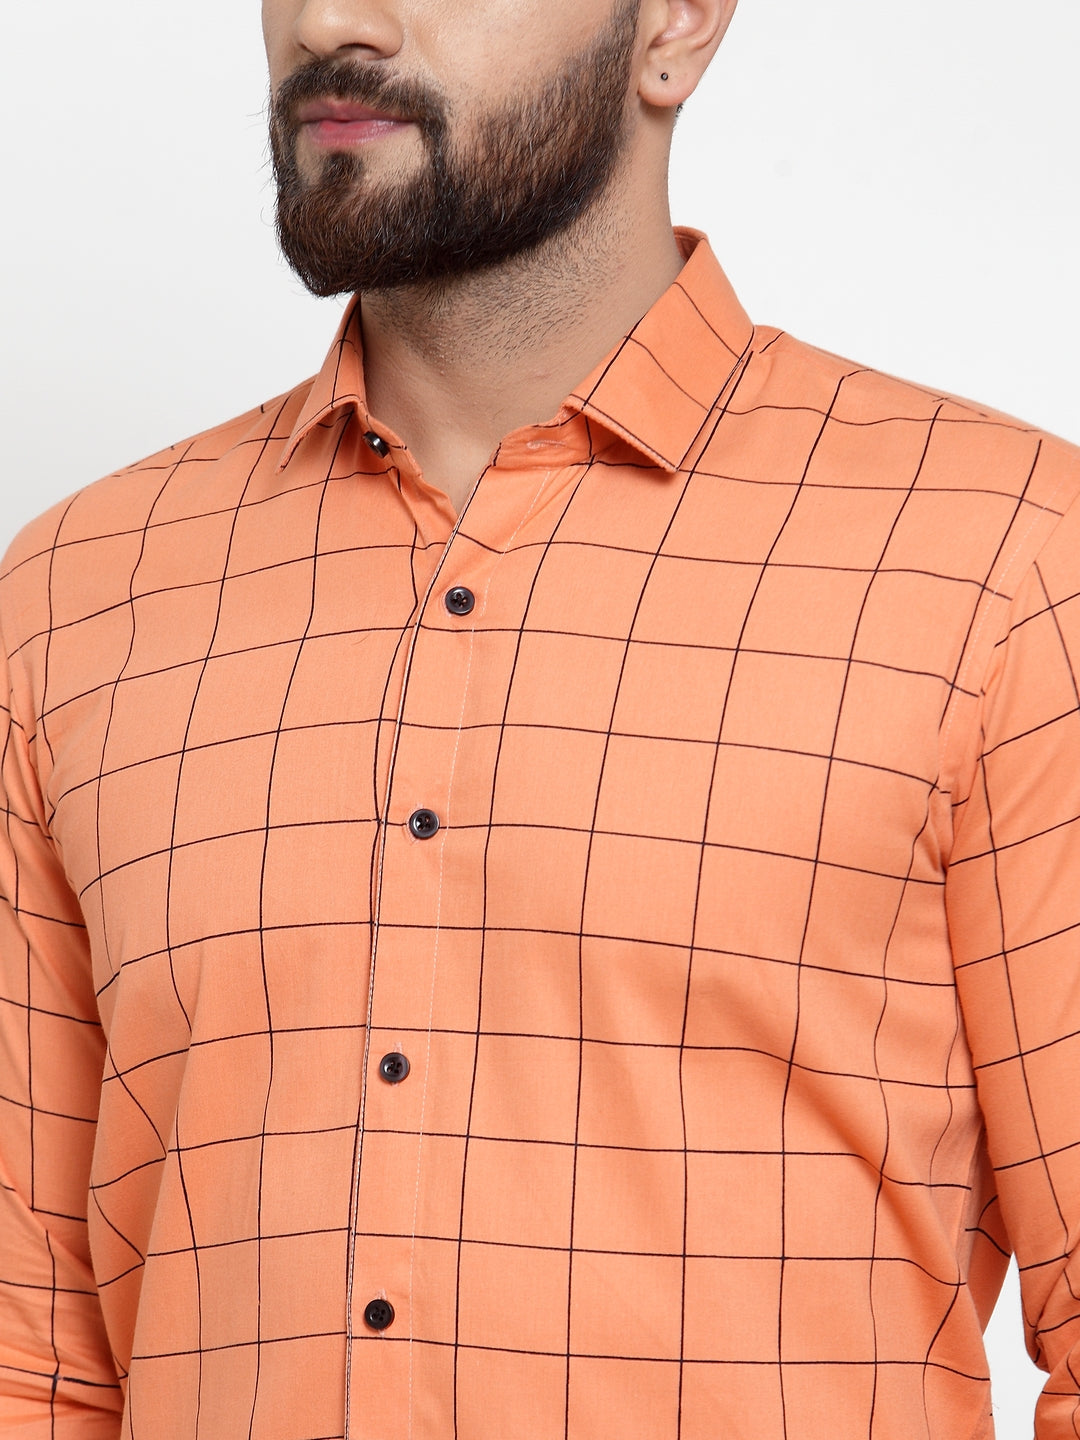 Men's Orange Cotton Checked Formal Shirts ( SF 742Orange ) - Jainish